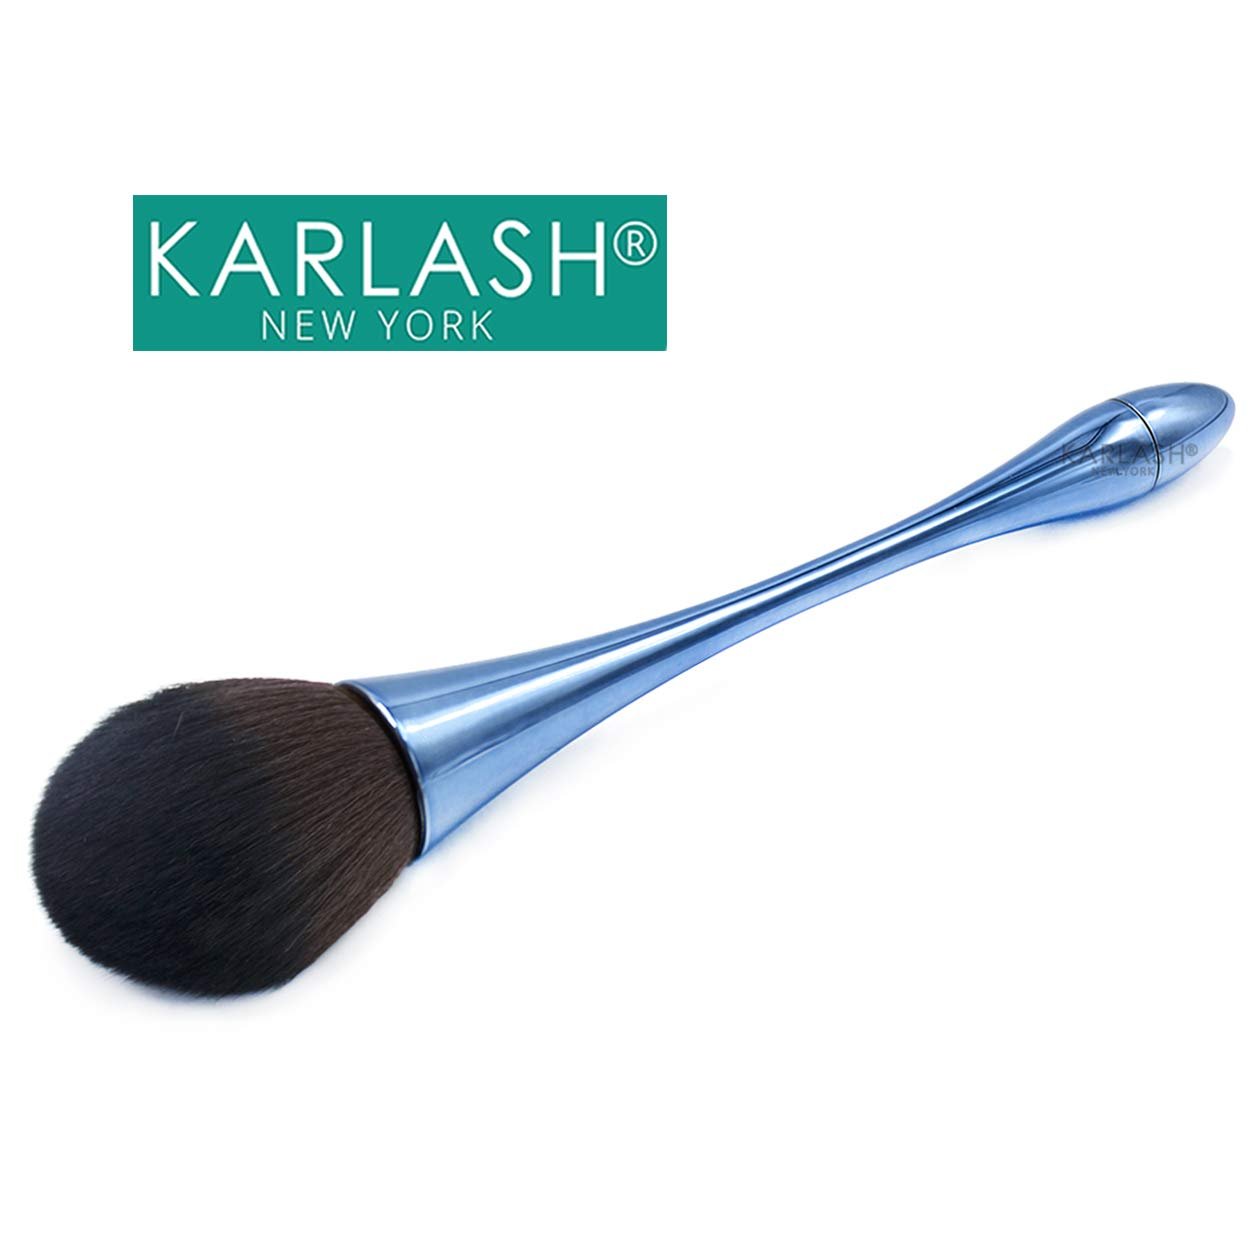 Karlash Nail Art Manicure Dust Remover Brush for Acrylic & UVGel Nails,Makeup Powder Brush #8 (Blue)